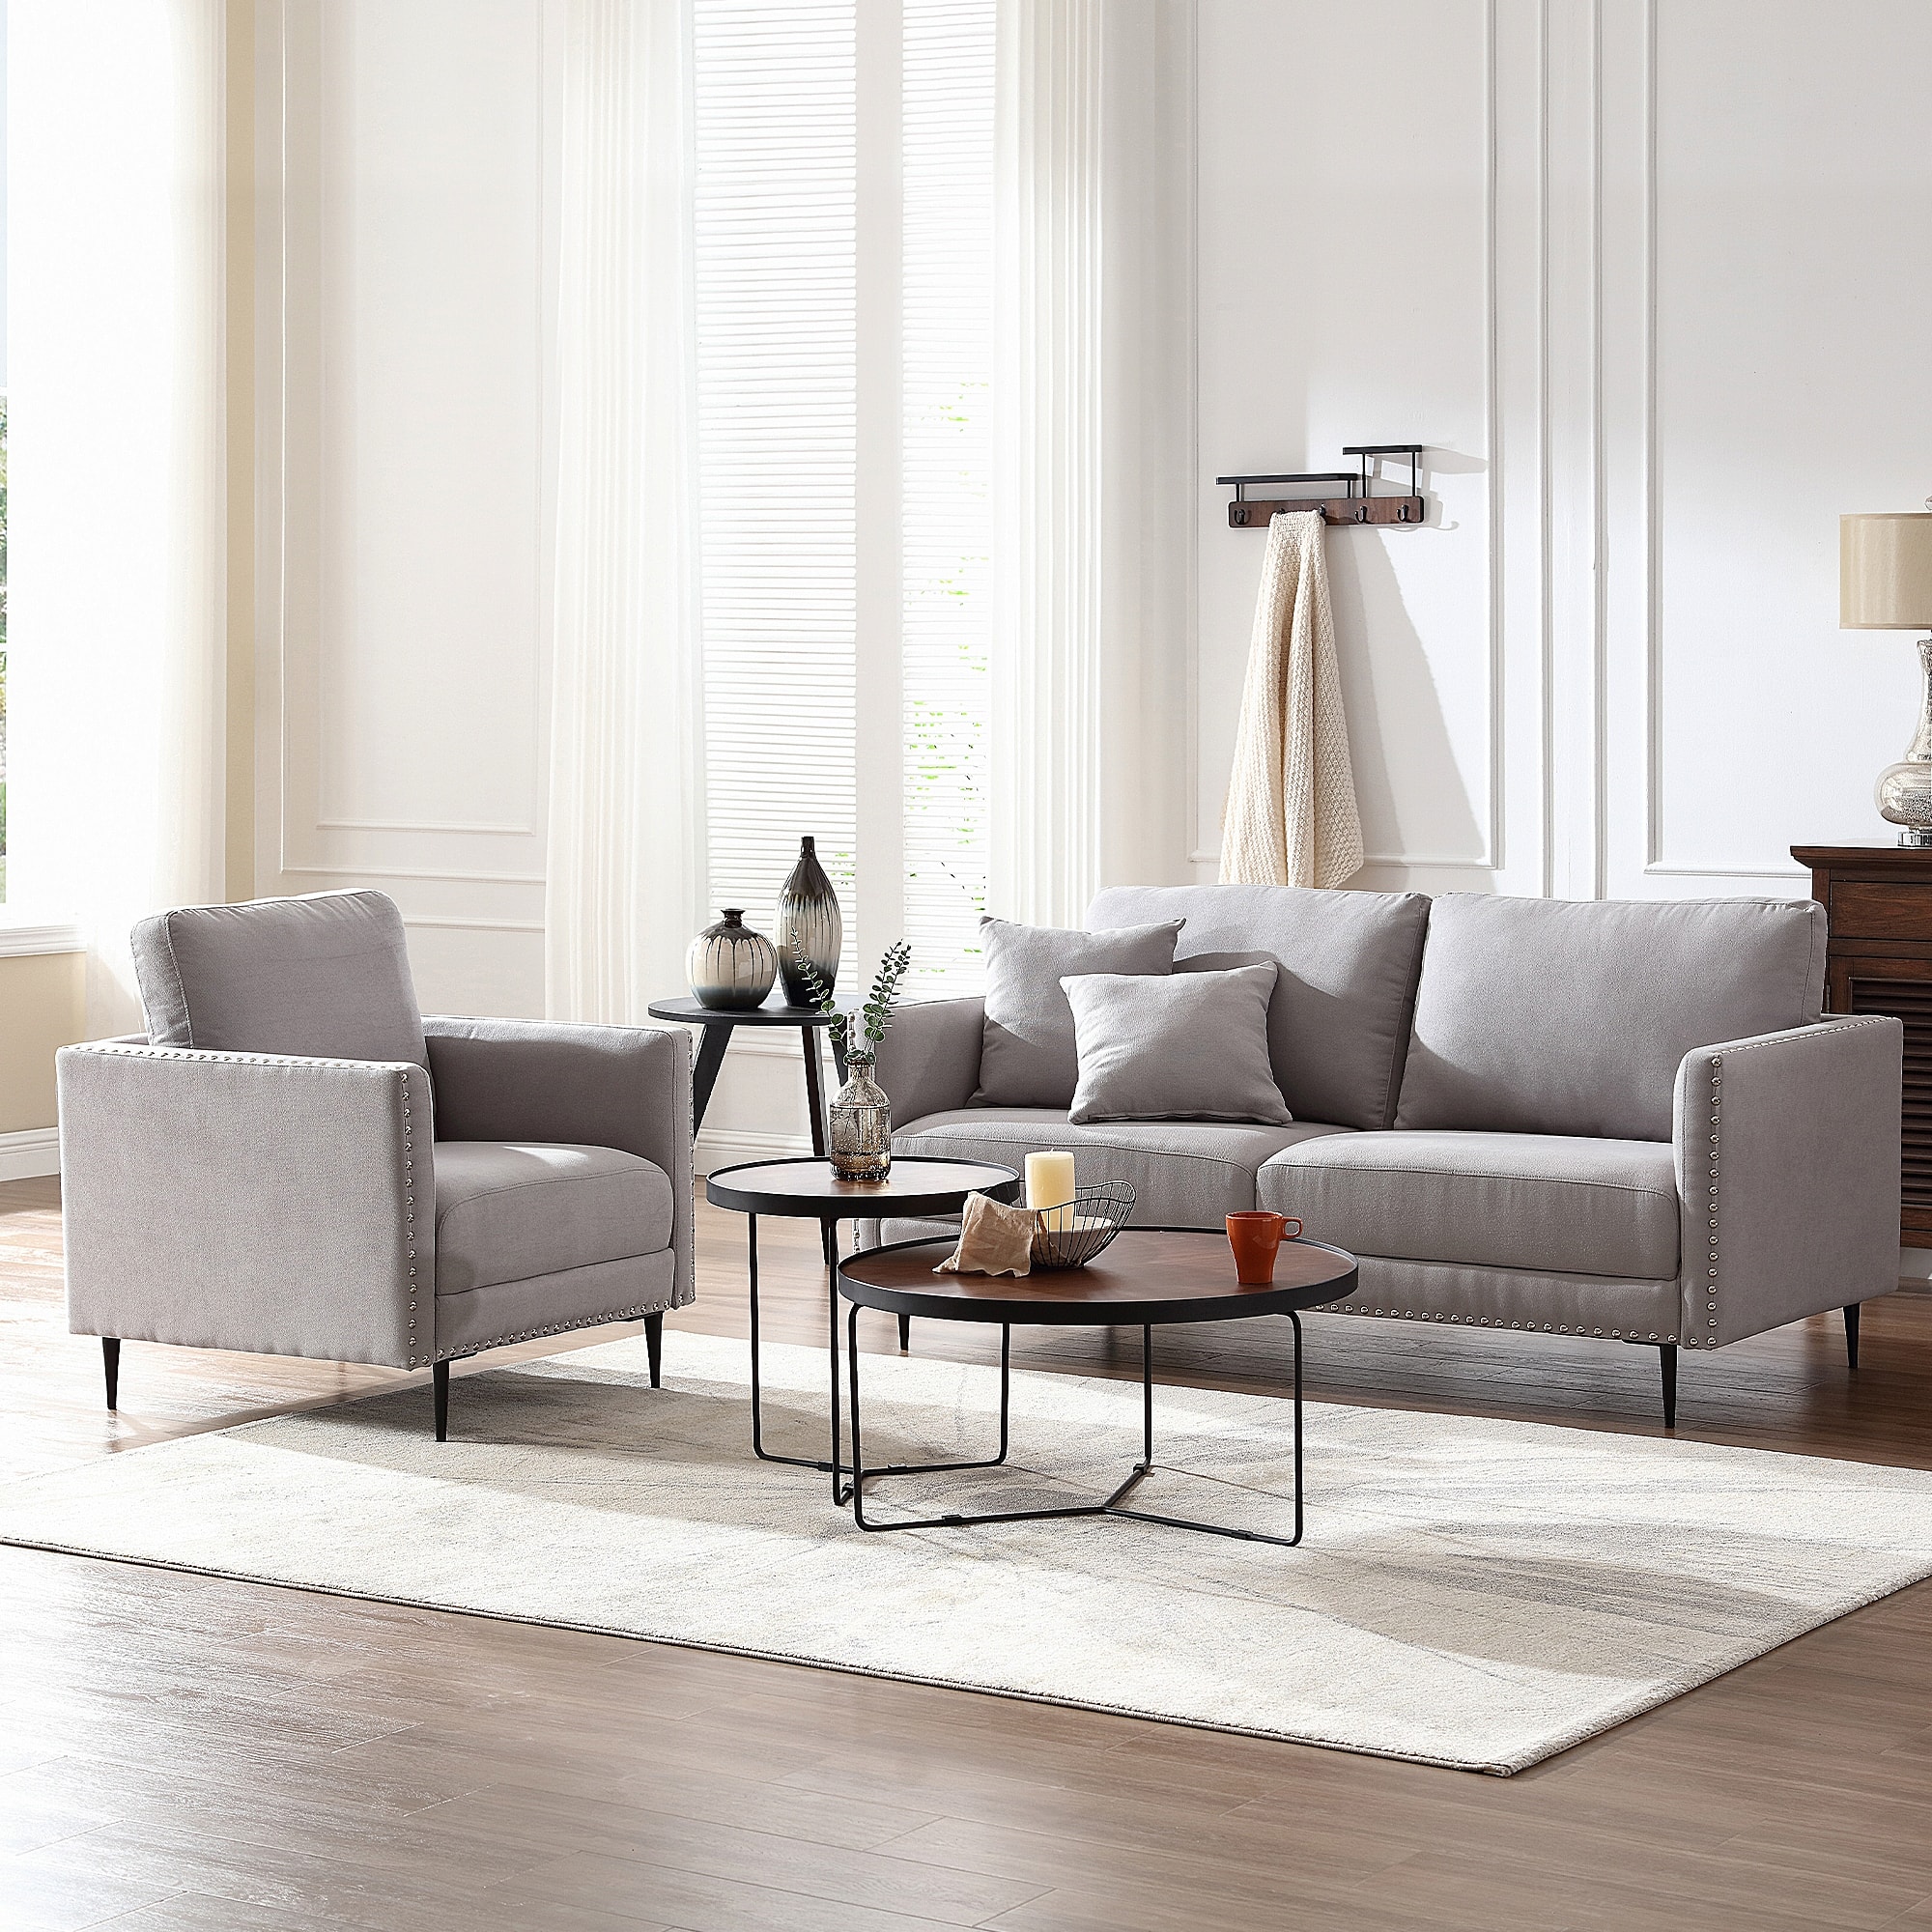 Morden Fort Chair Sofa Set,2 Piece Modern Living Room Furniture Set w ...